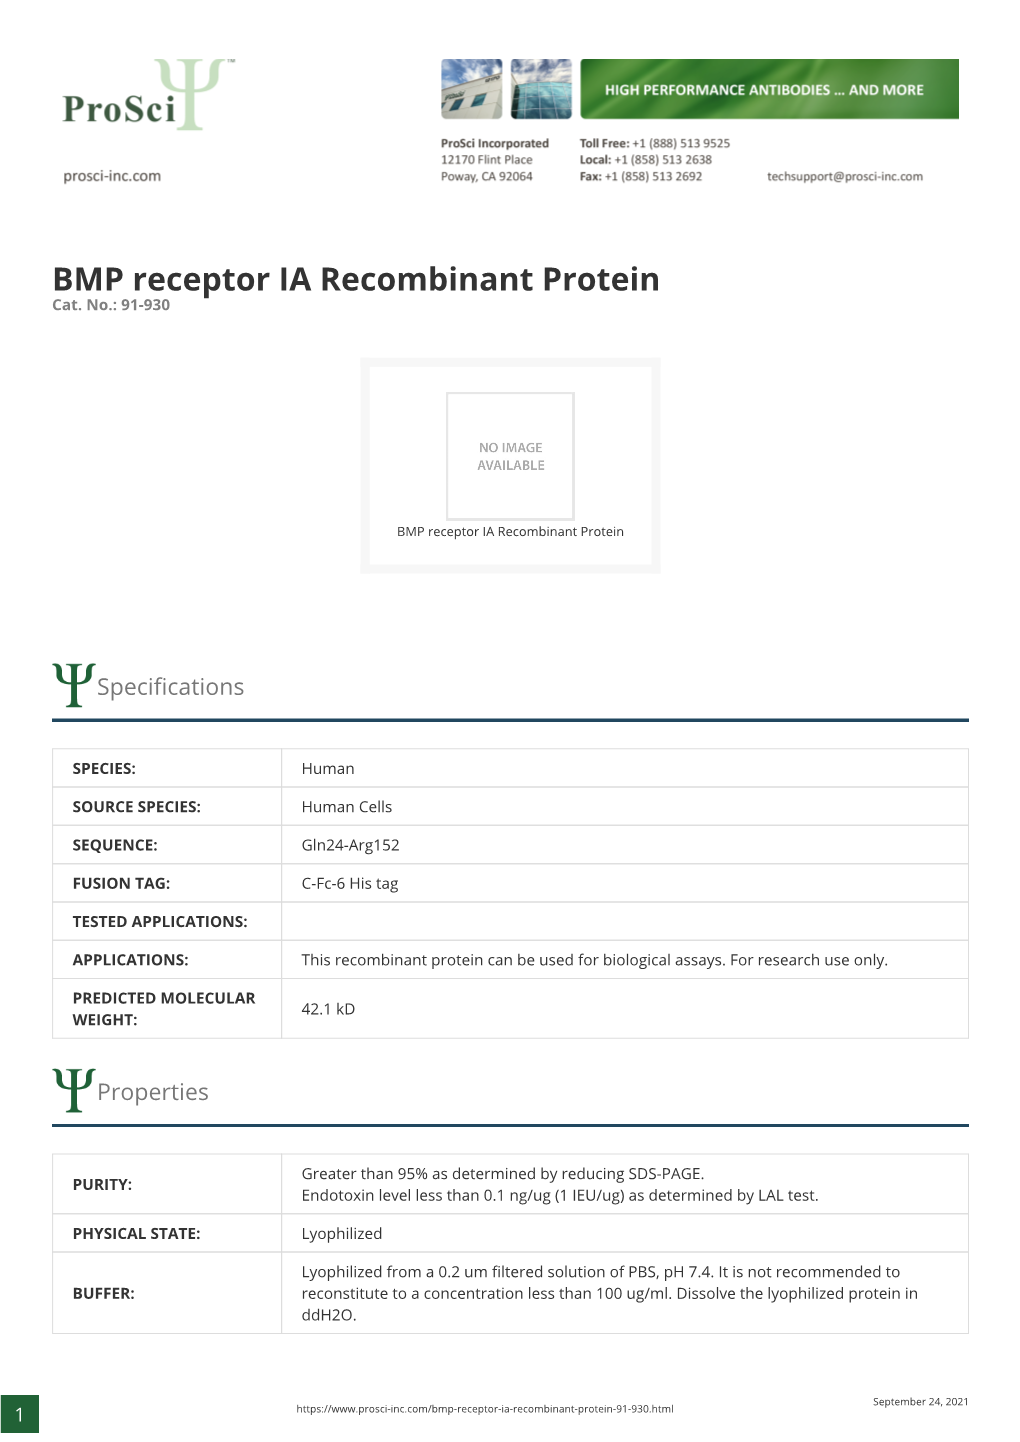 BMP Receptor IA Recombinant Protein Cat